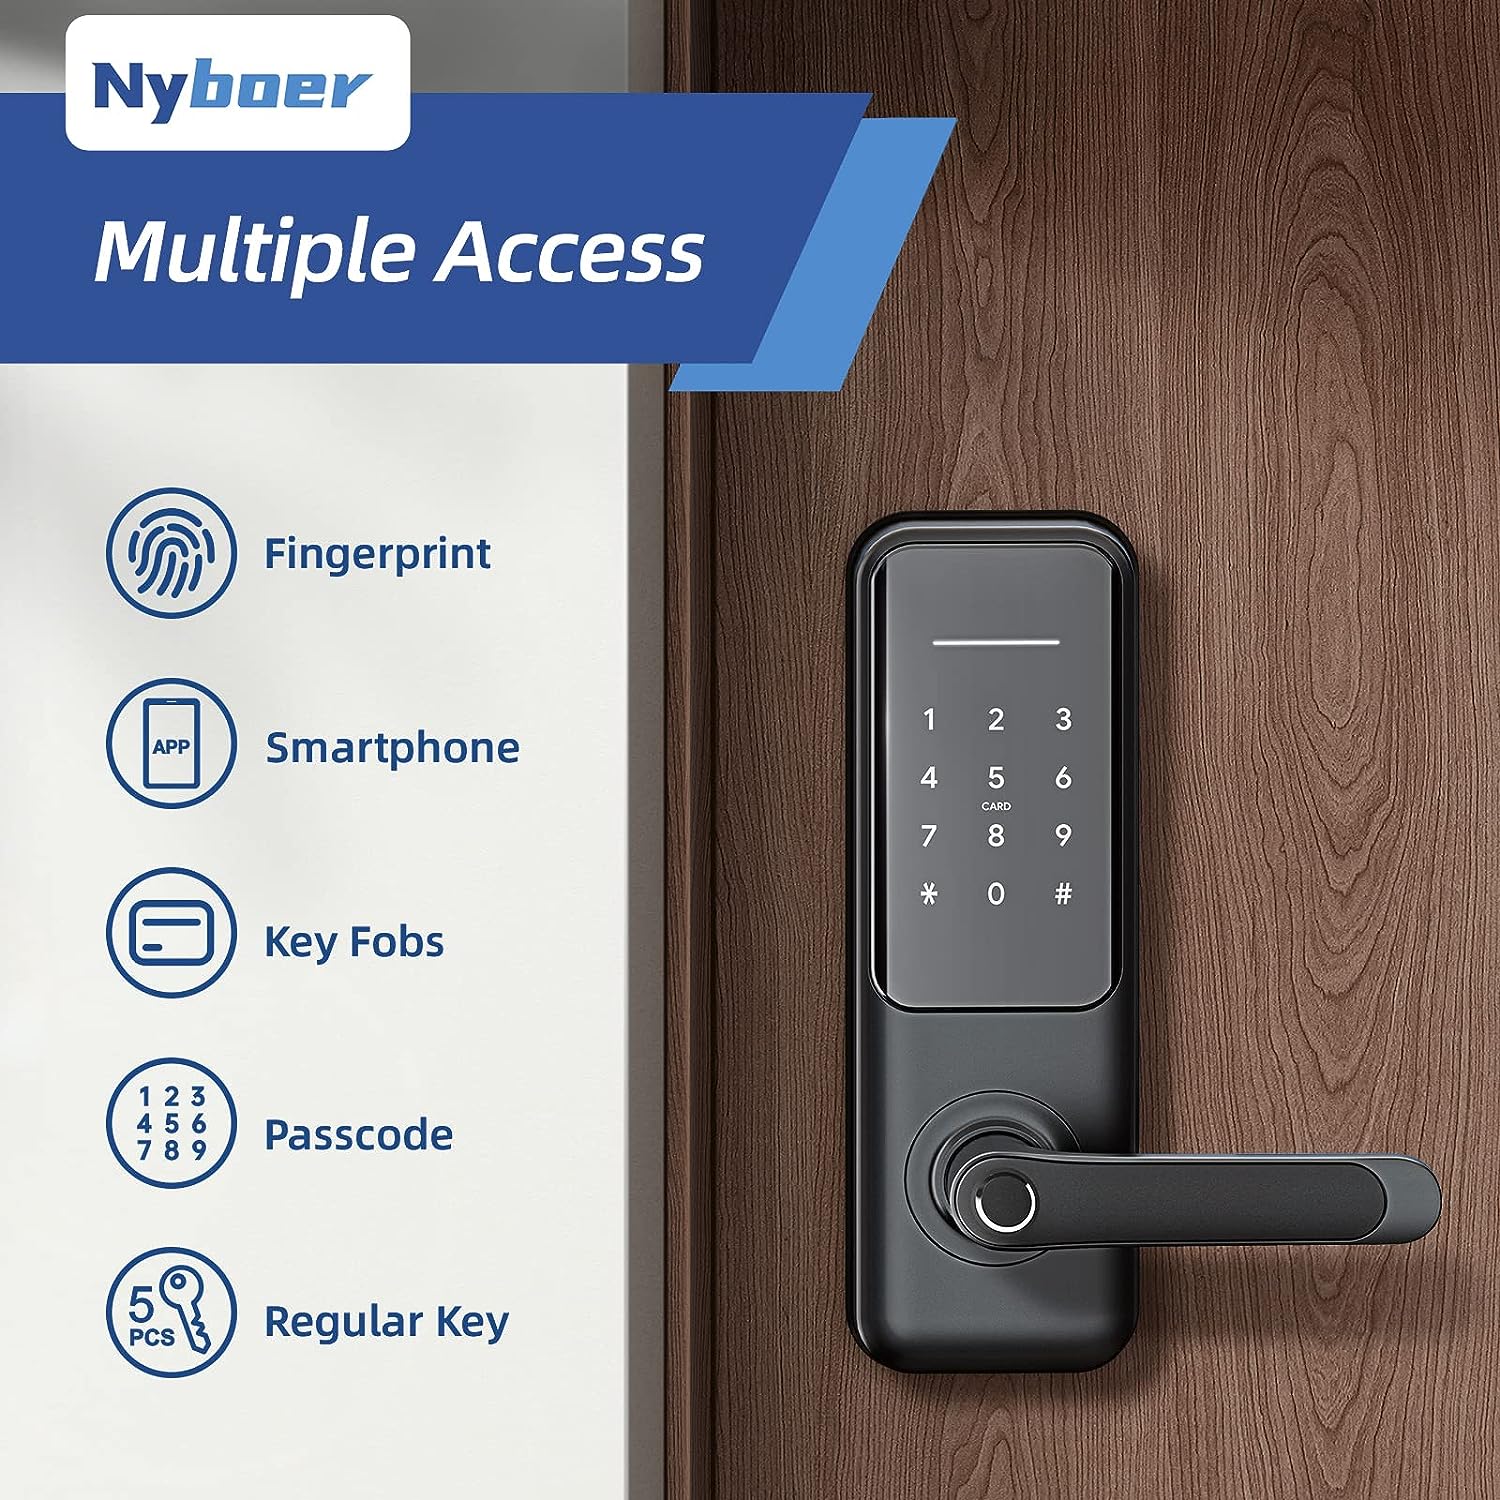 Smart door locks
                        Keyless entry locks
                        Home security technology 